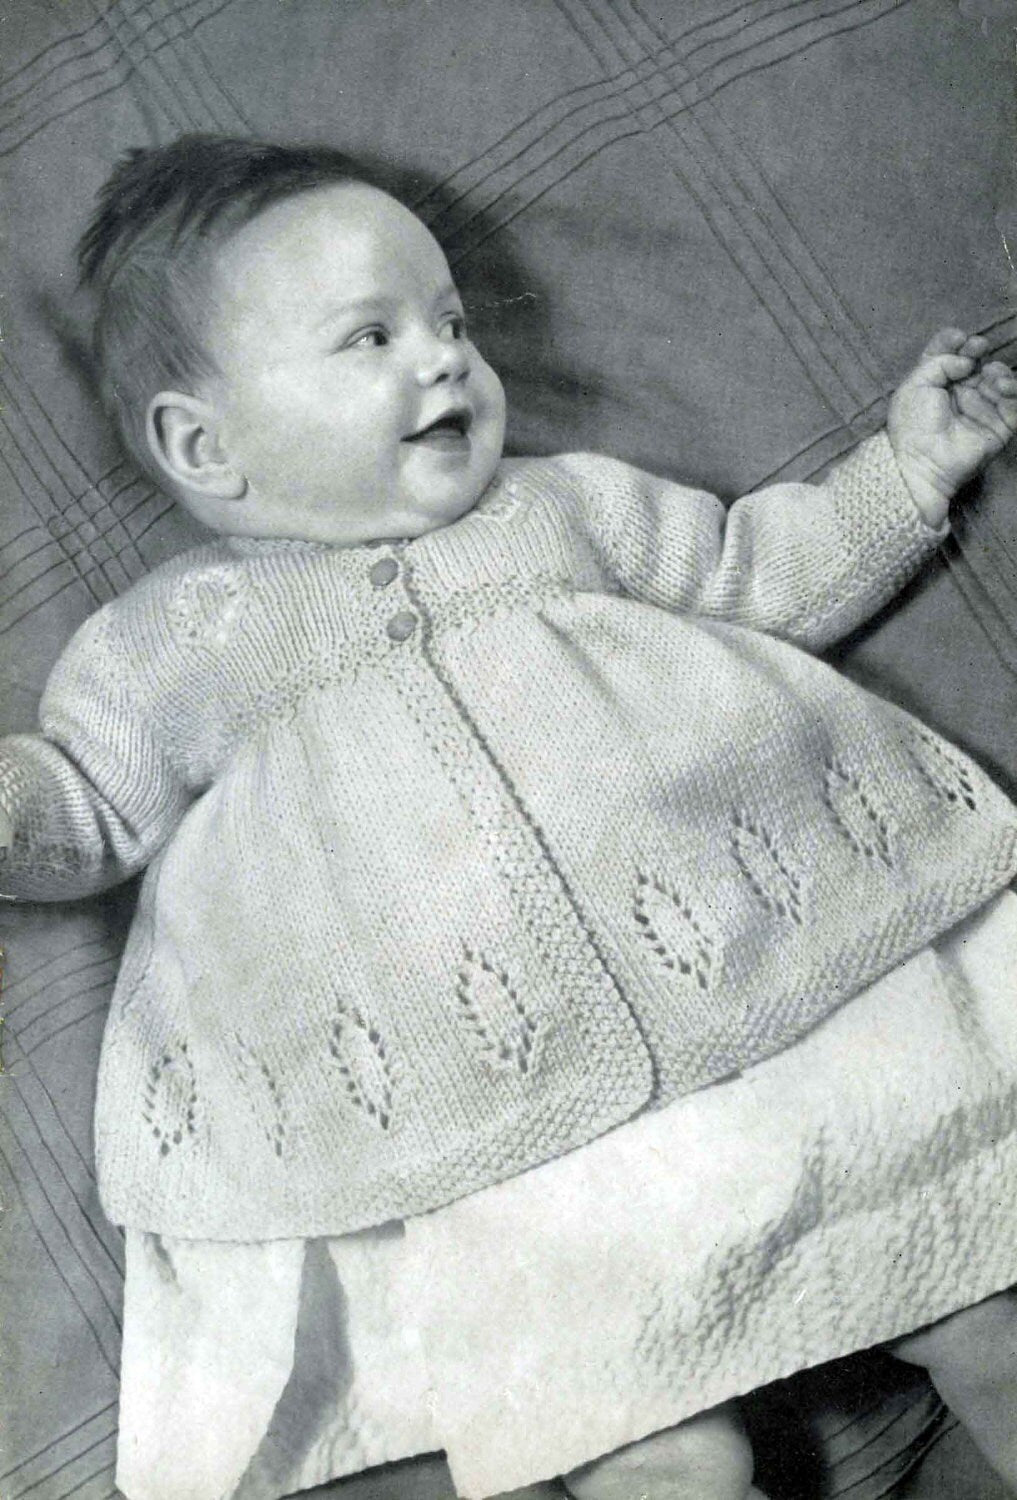 Baby Cardigan, Matinee Coat, 1-6 months, 4ply, 50s Knitting Pattern, P&B 353